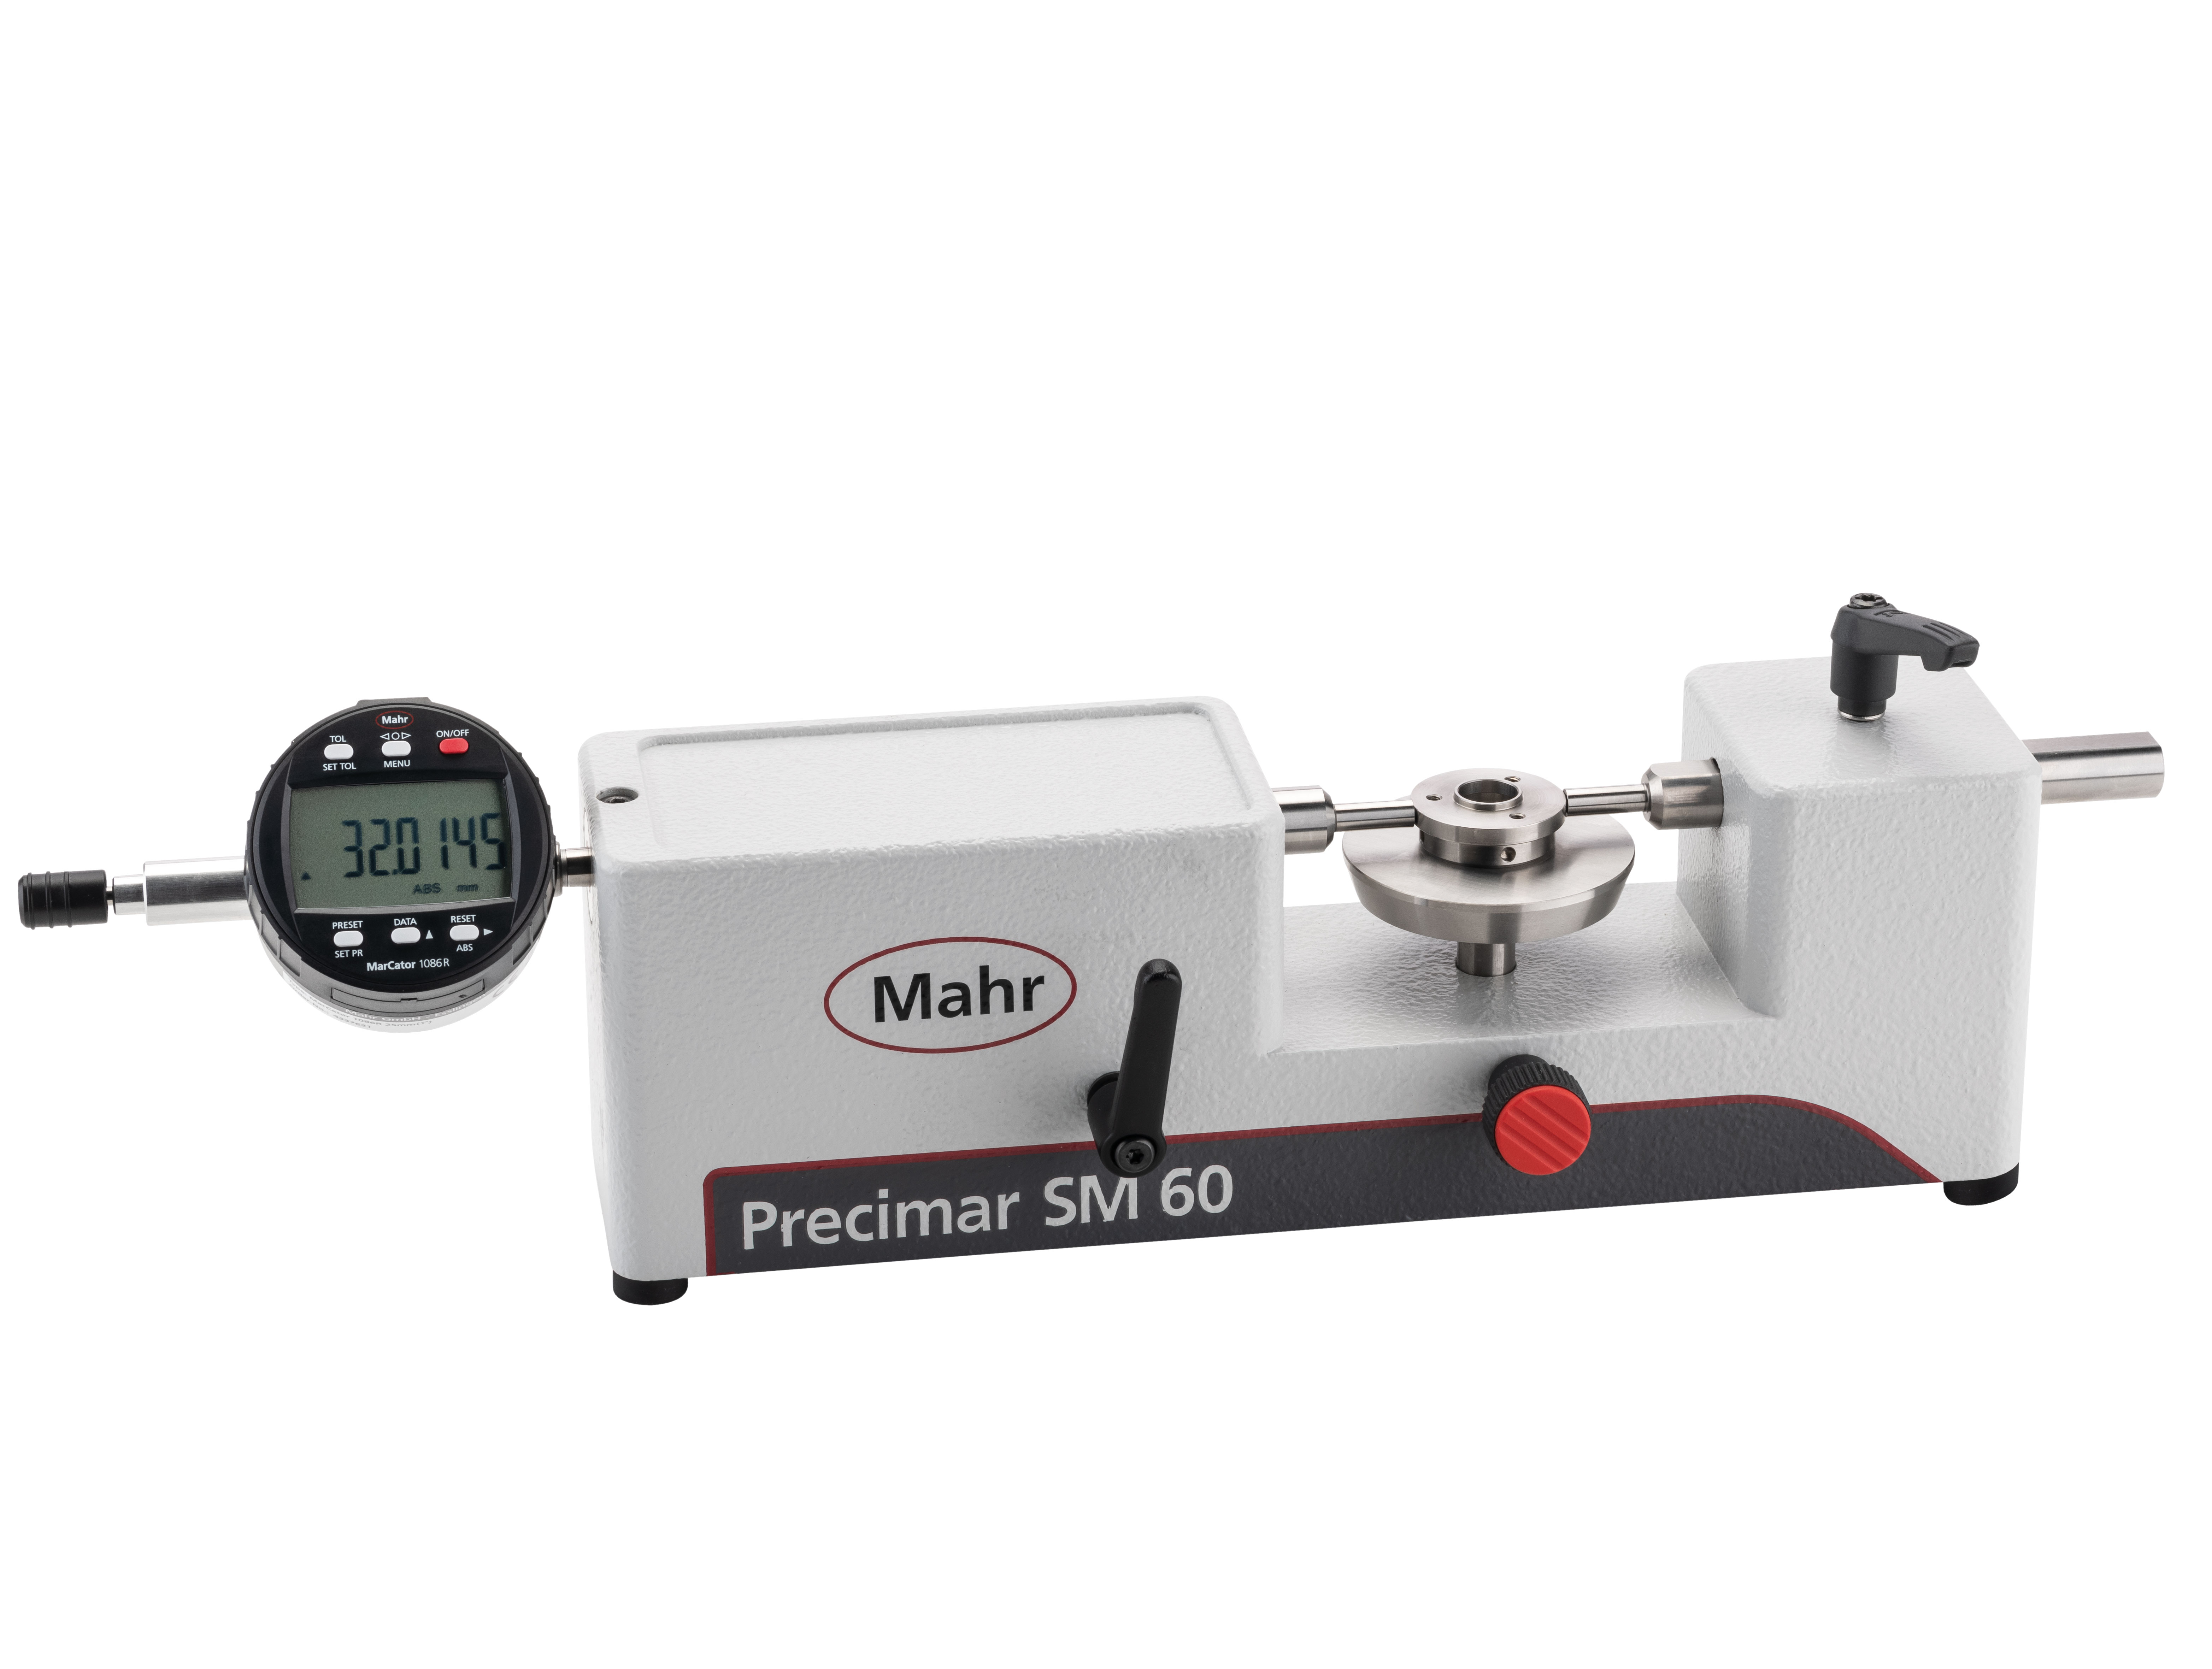 Mahr Introduces New Precimar SM 60 Length Measurement System